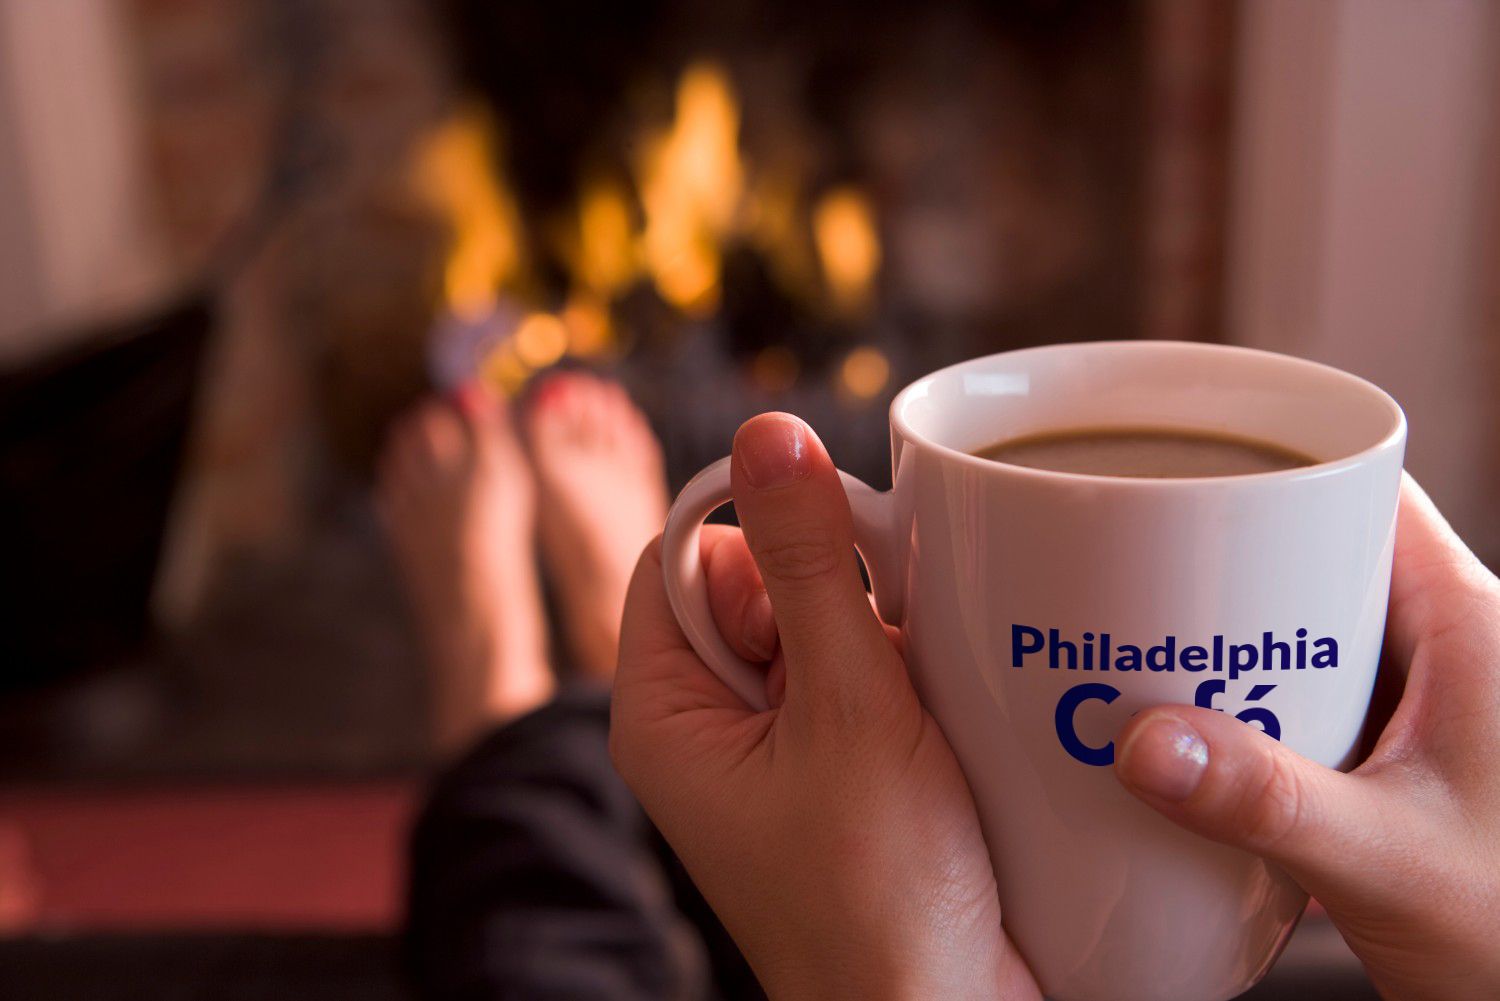 Custom printed coffee mug with Philadelphia logo